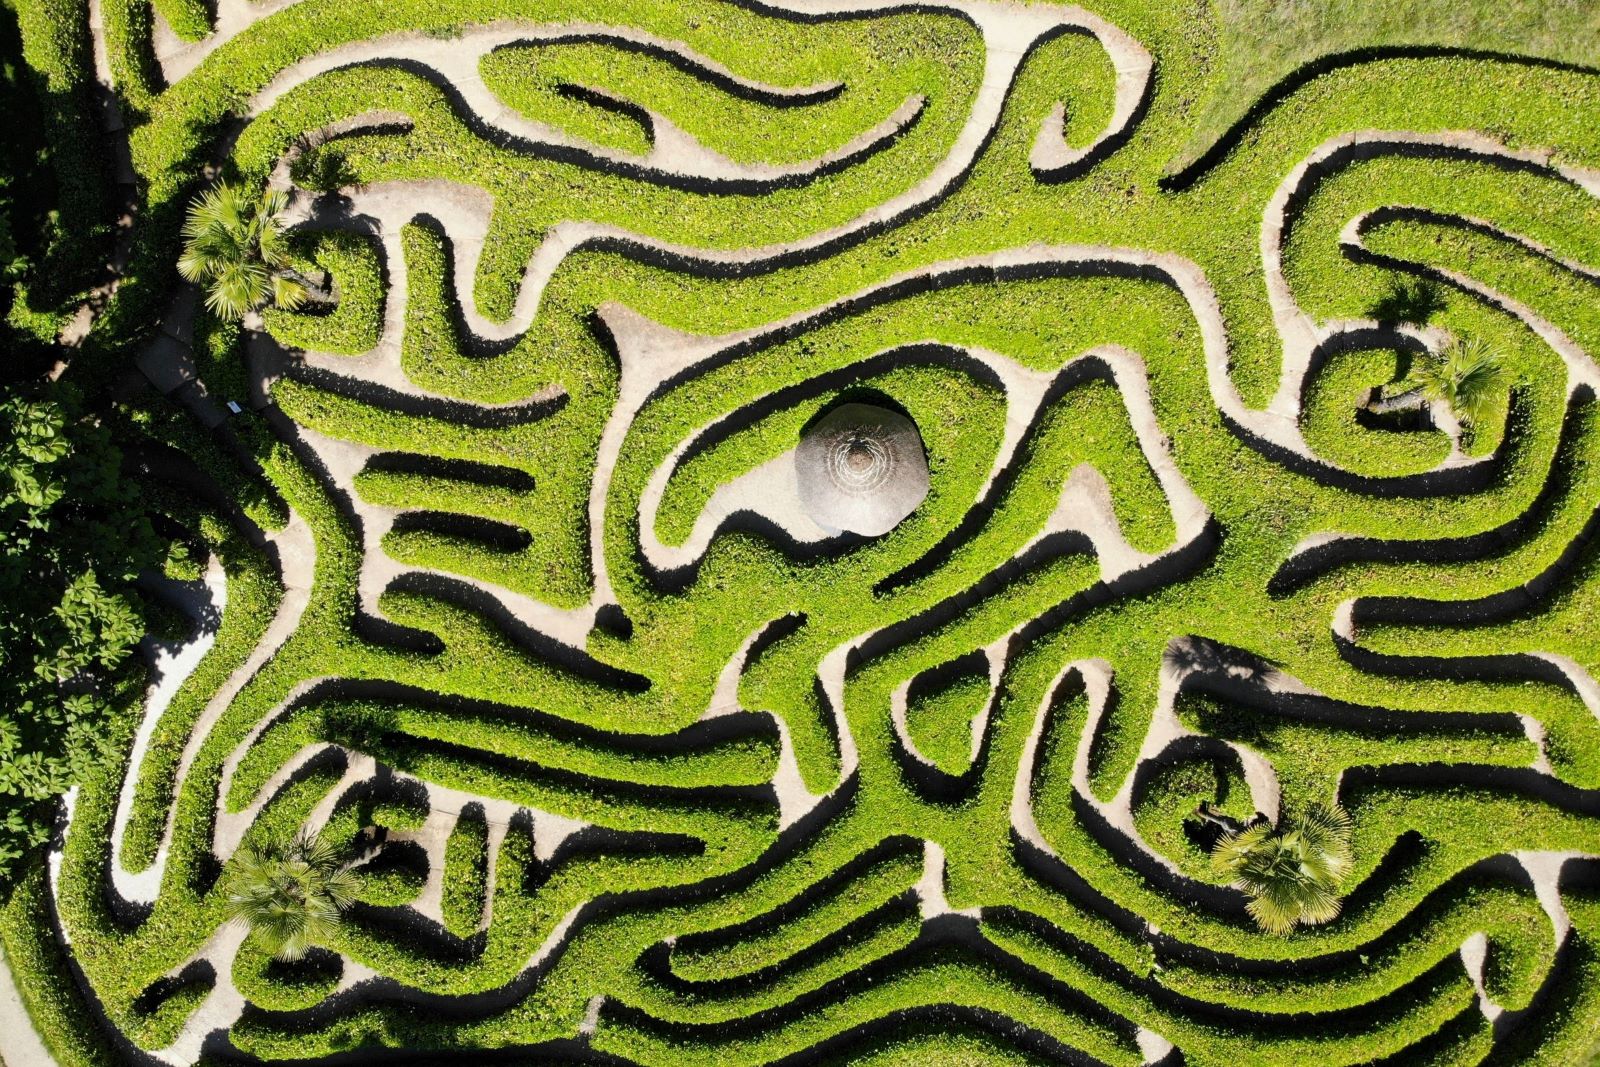 Laurel hedge maze at Glendurgan Gardens from above